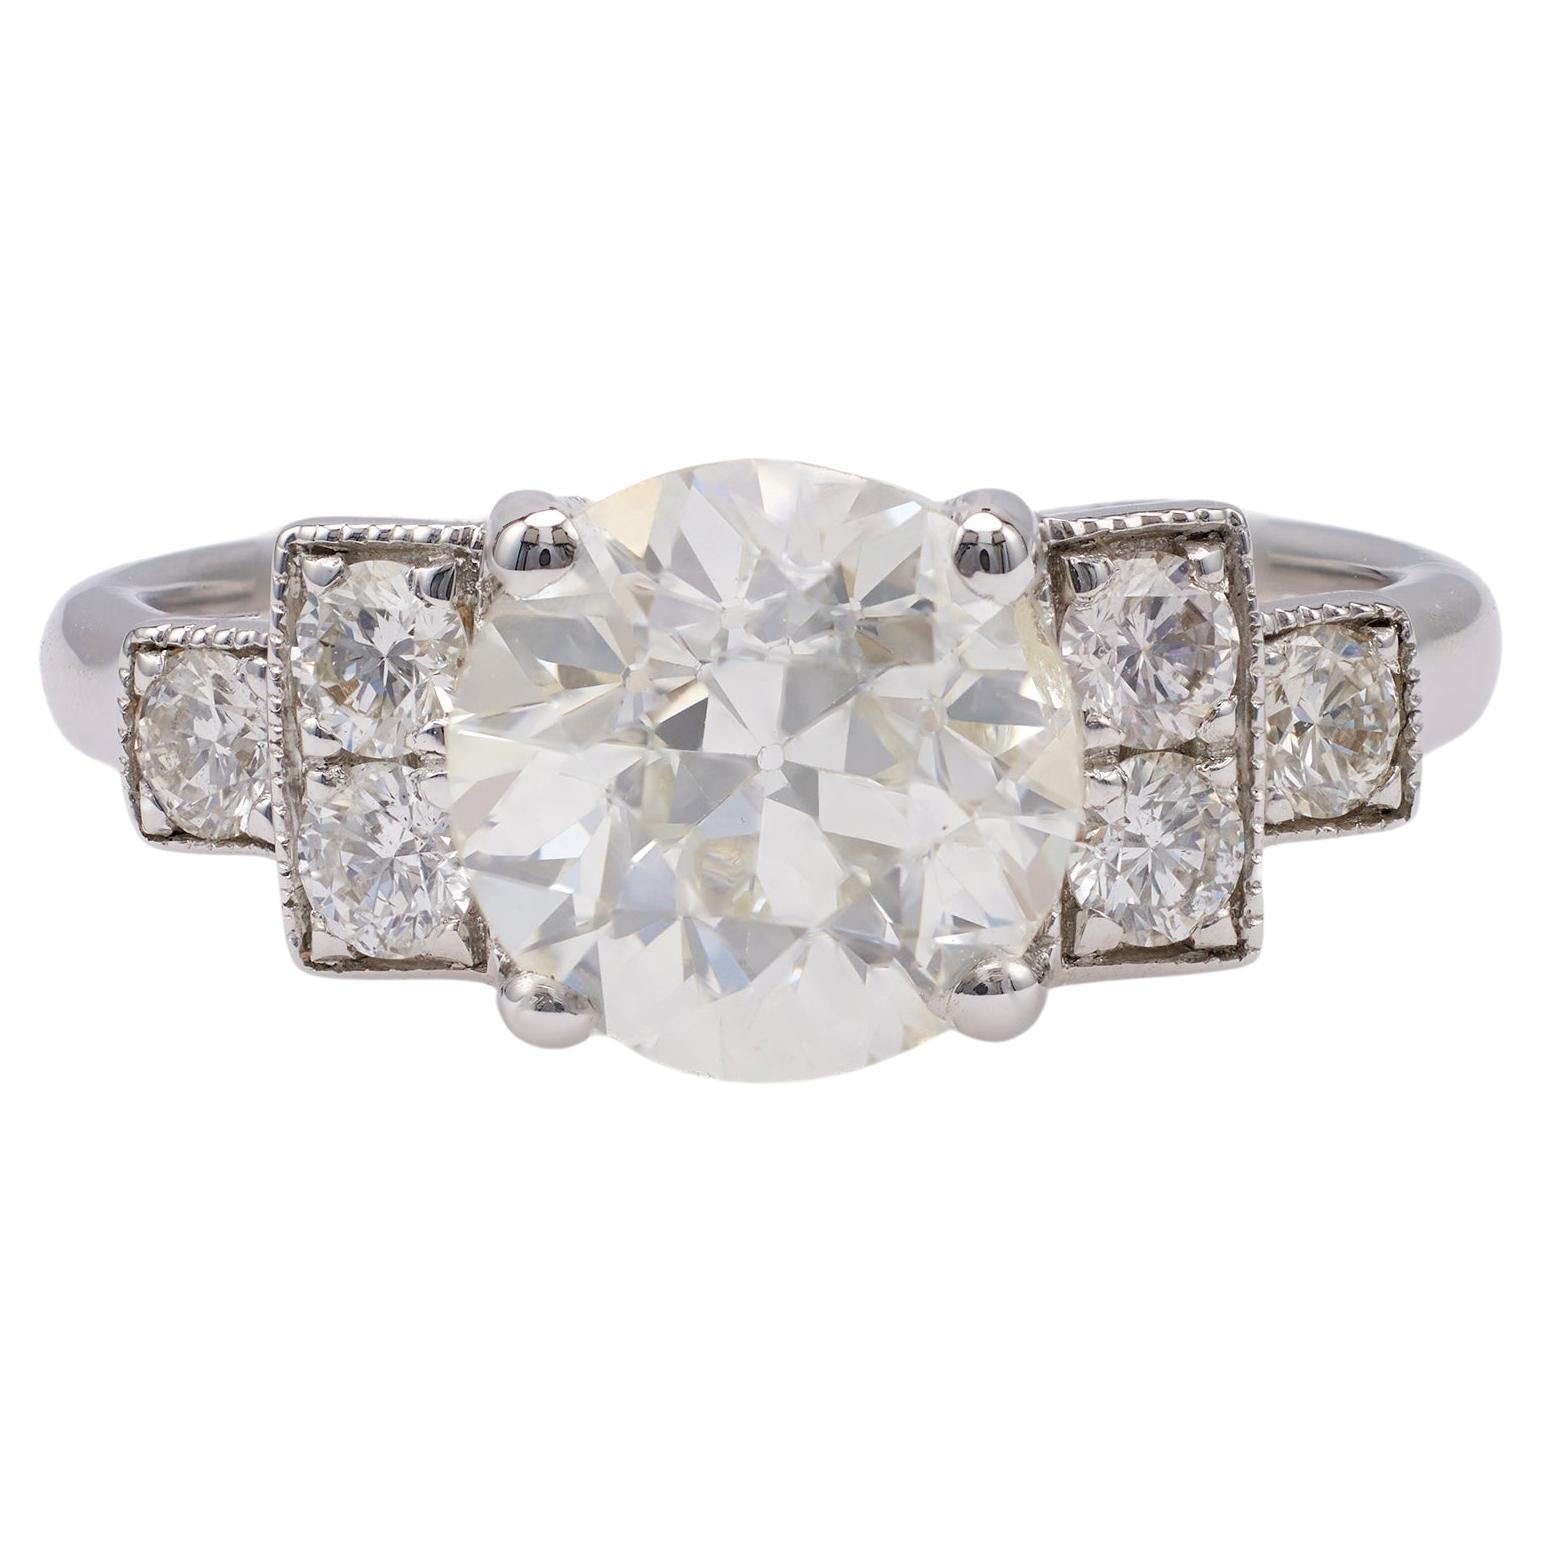 Art Deco Inspired GIA 2.21 Carat Old European Cut Diamond 18k White Gold Ring For Sale